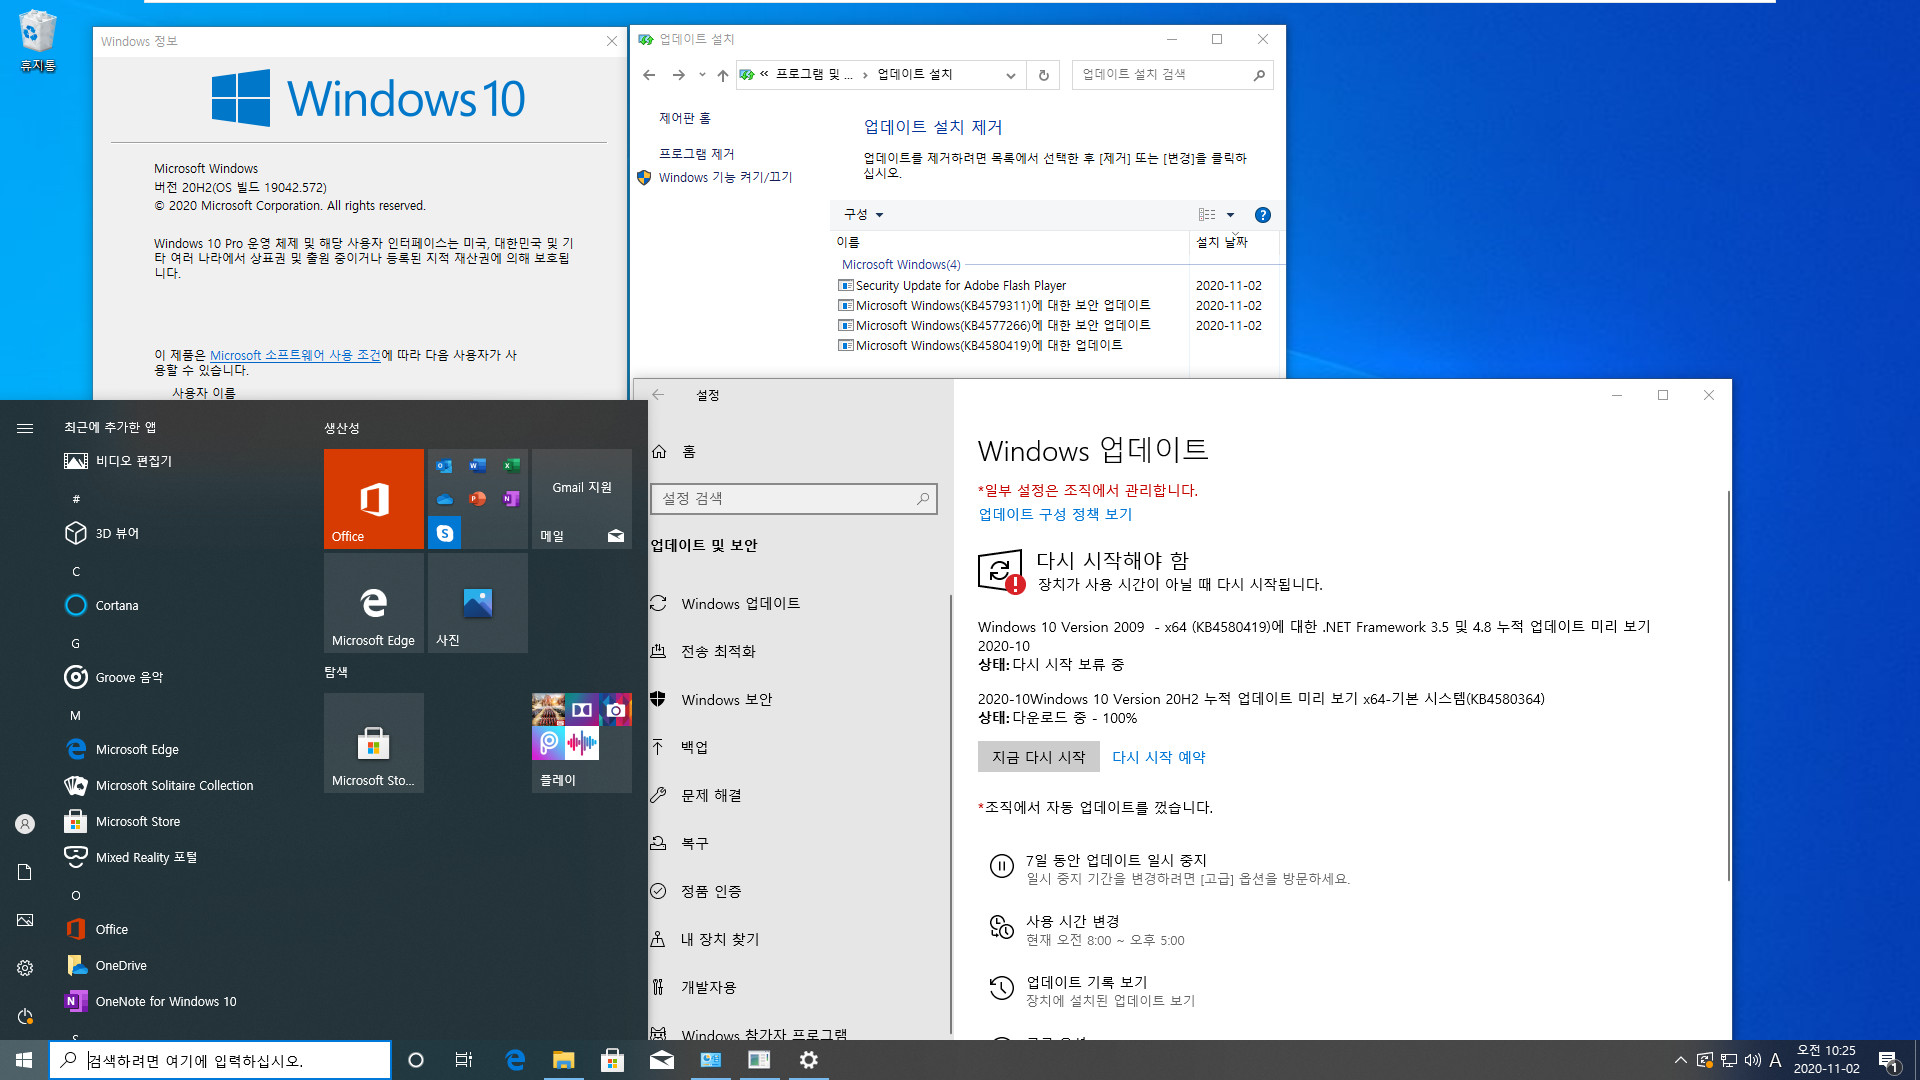 Windows 10 버전 20H2 기능 업데이트 KB4562830 폴더의 mum 파일들만 찾아서 설치하기.bat - 크로미엄 엣지 설치하지 않고 버전 20H2만 설치하기 테스트 - 뻘짓했네요 2020-11-02_102511.jpg